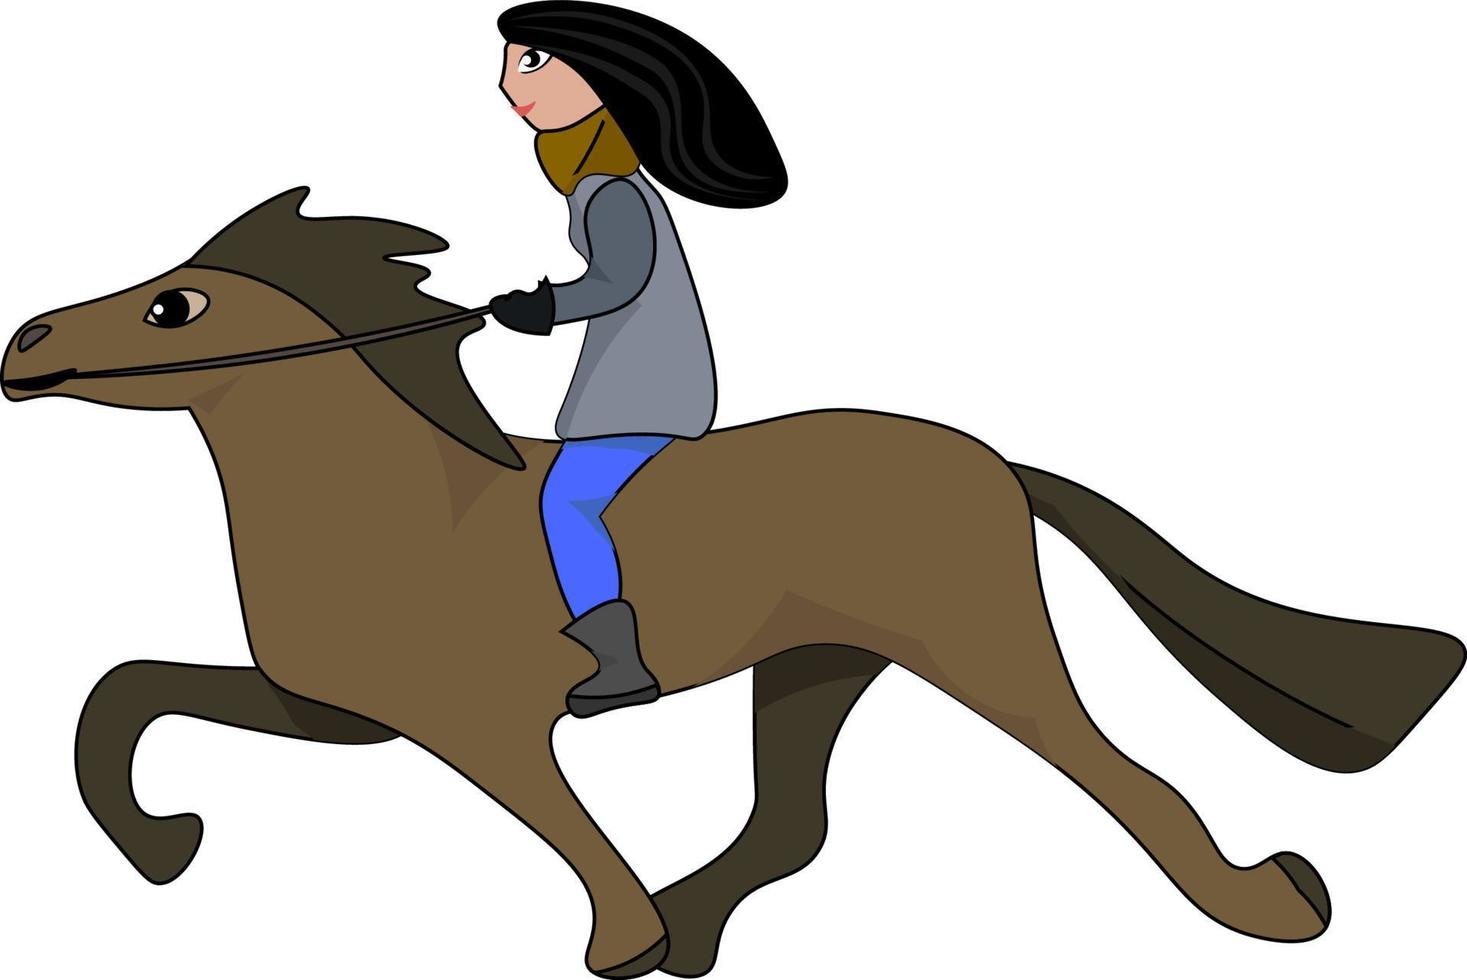 Female horse rider, illustration, vector on white background.